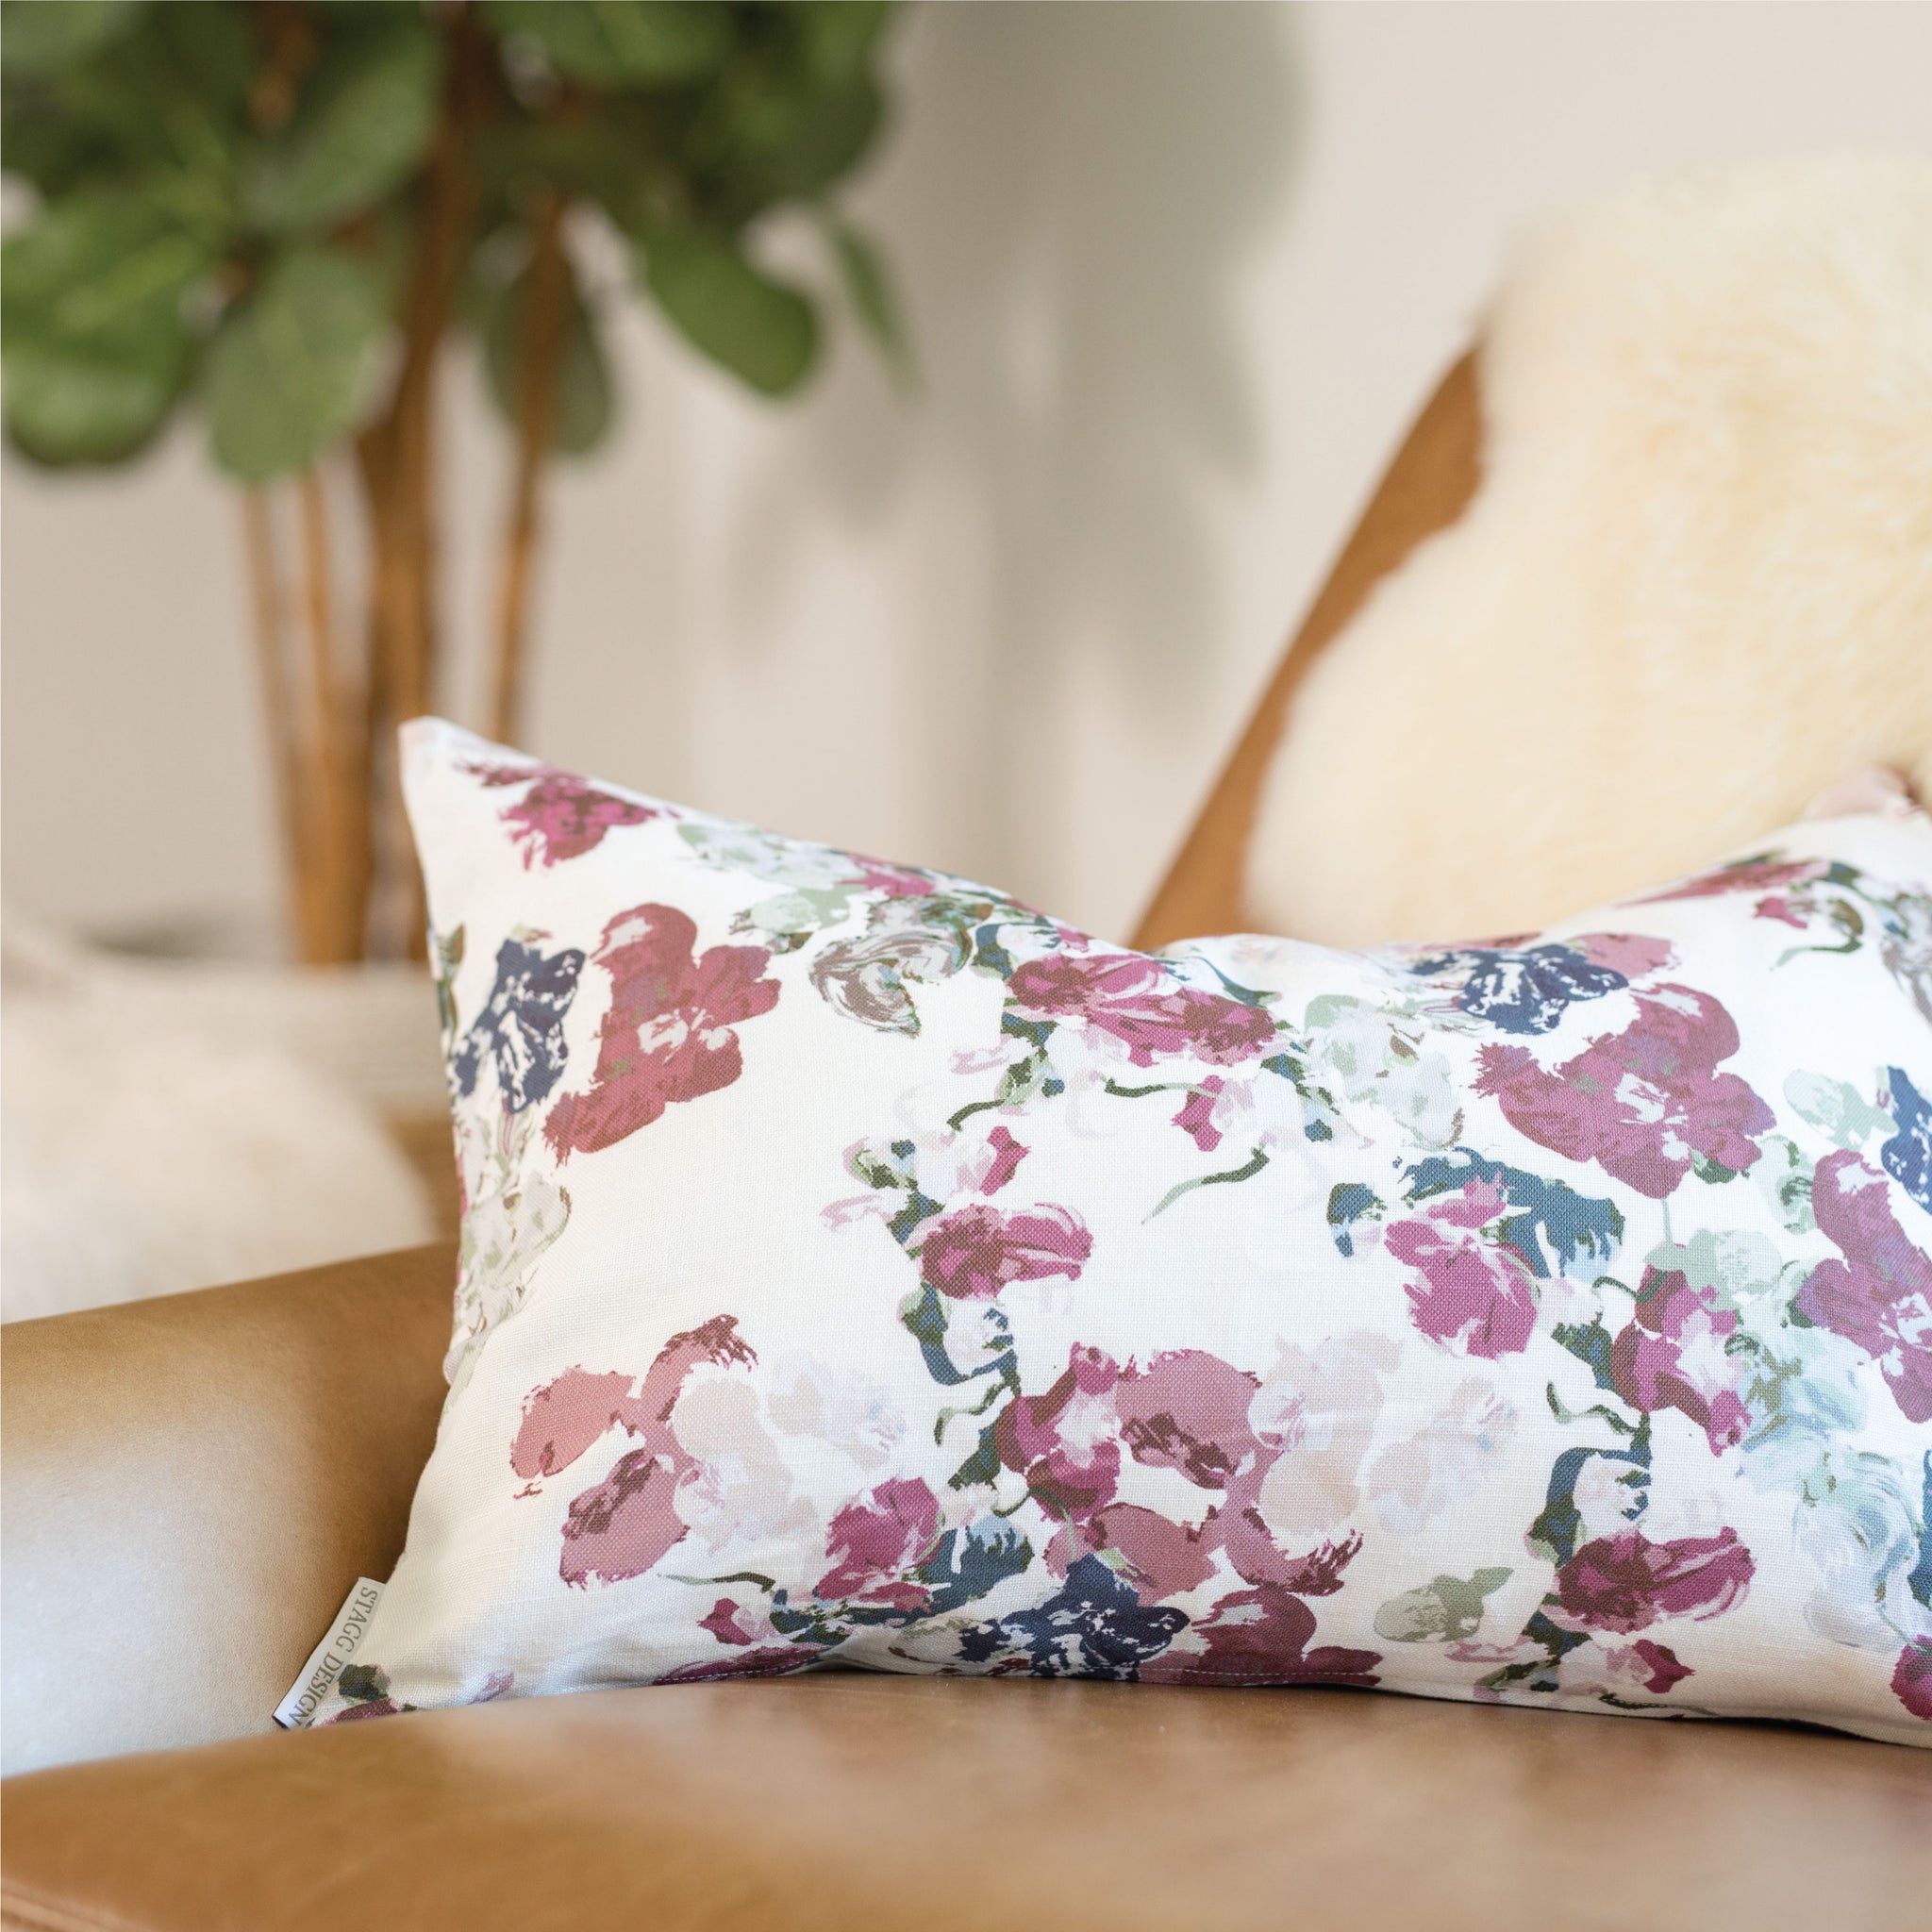 Anna Floral Pillow - Currant